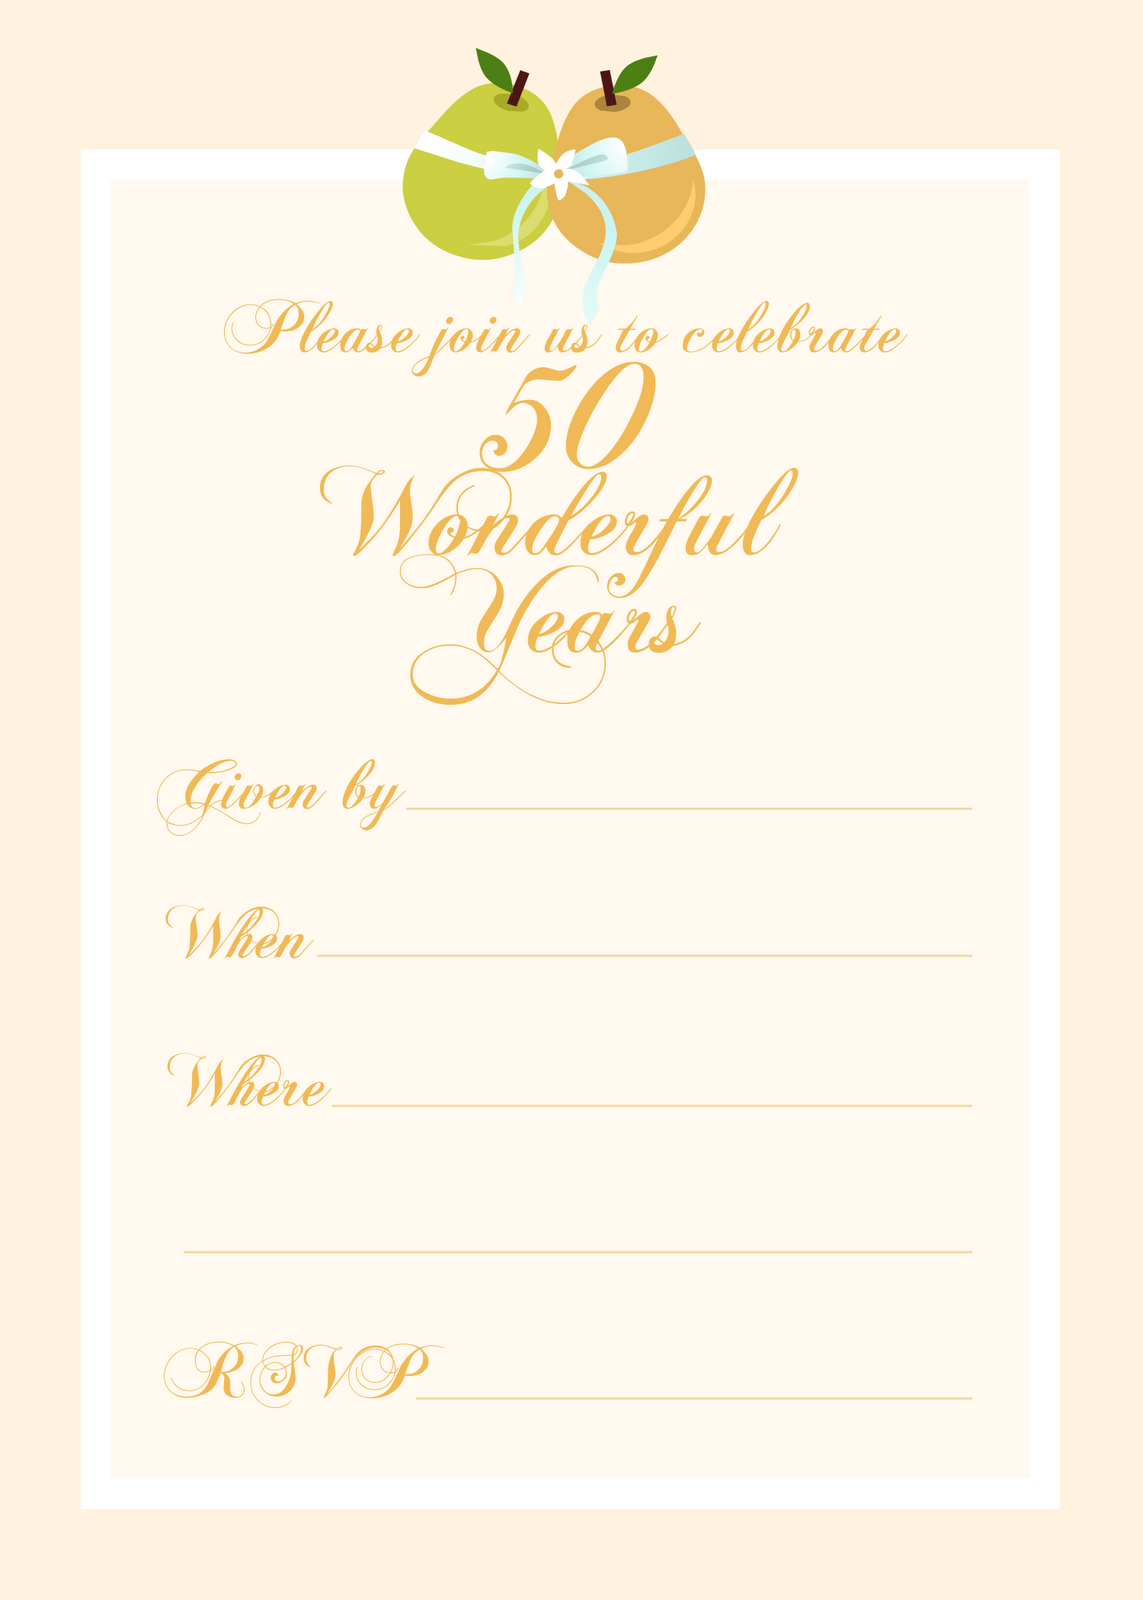 anniversary invitation clipart - photo #33